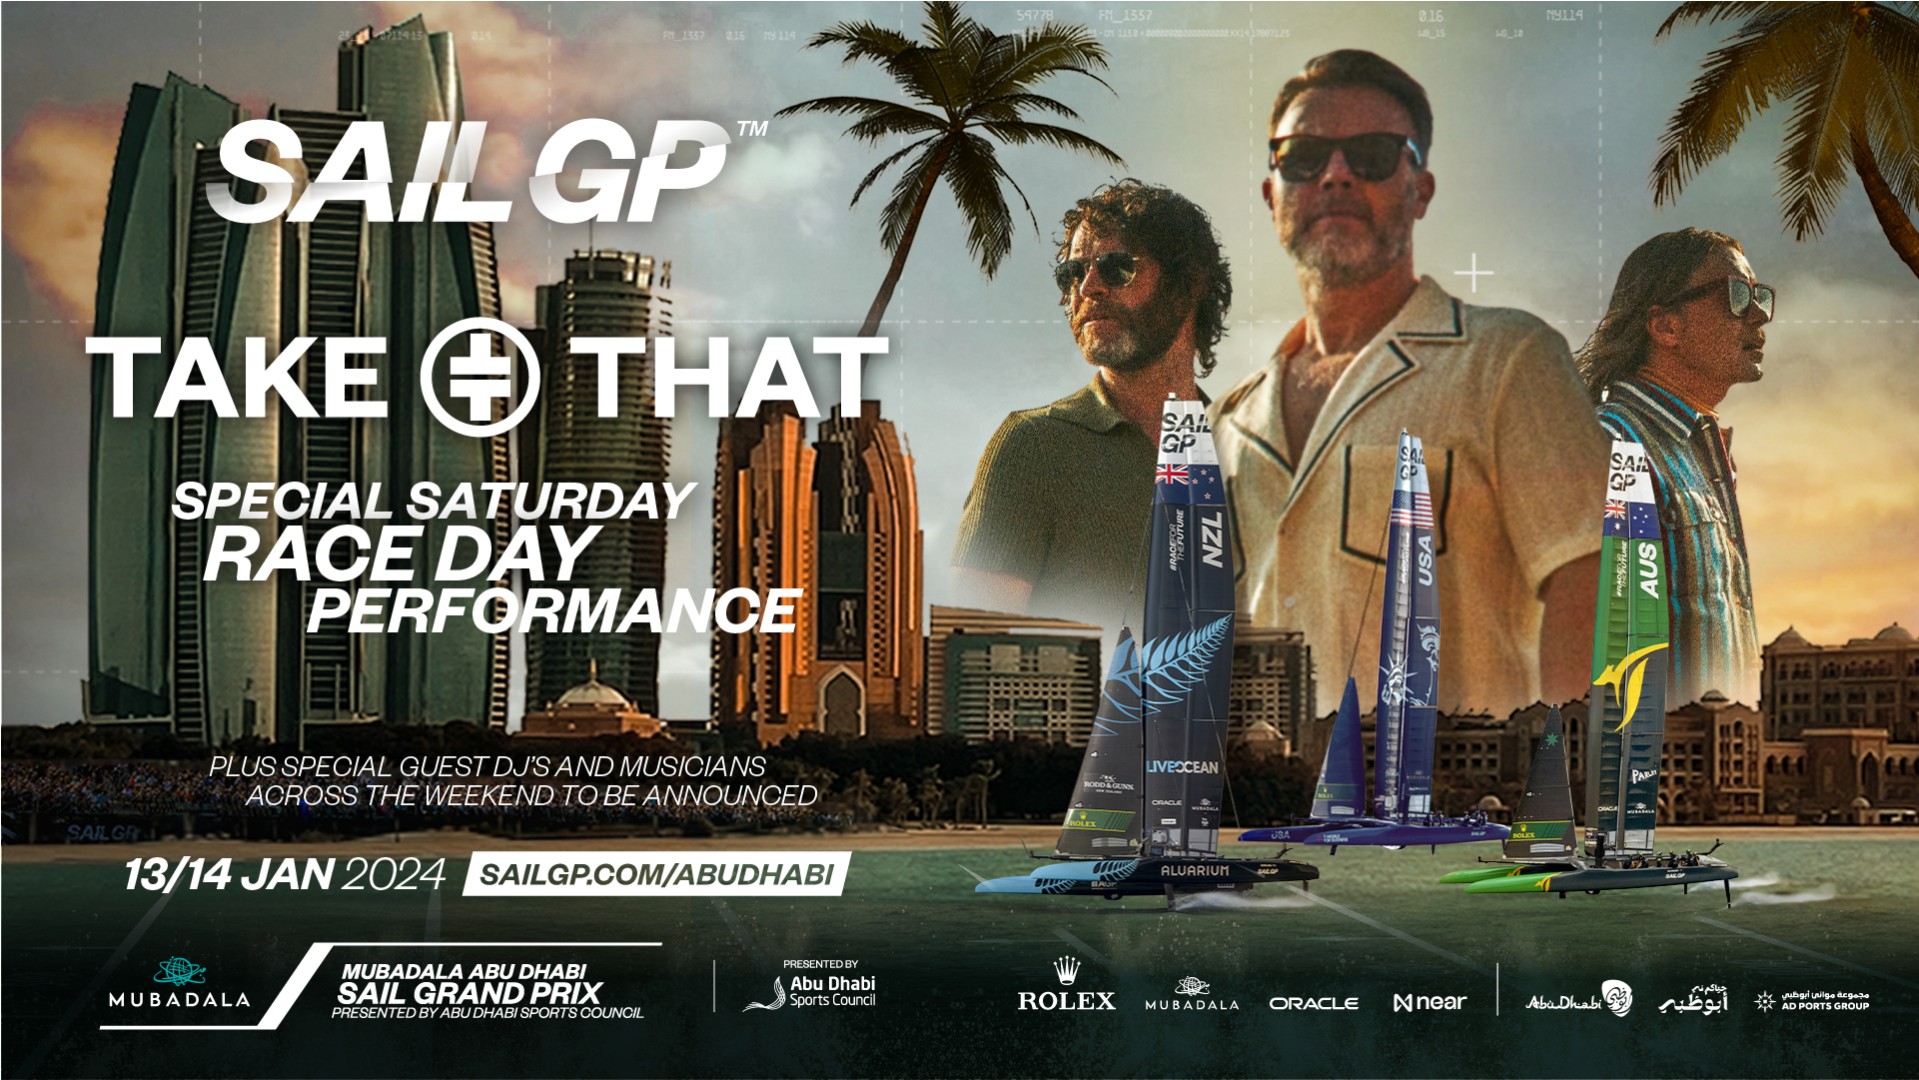 Global music superstars Take That to perform for SailGP in Abu Dhabi